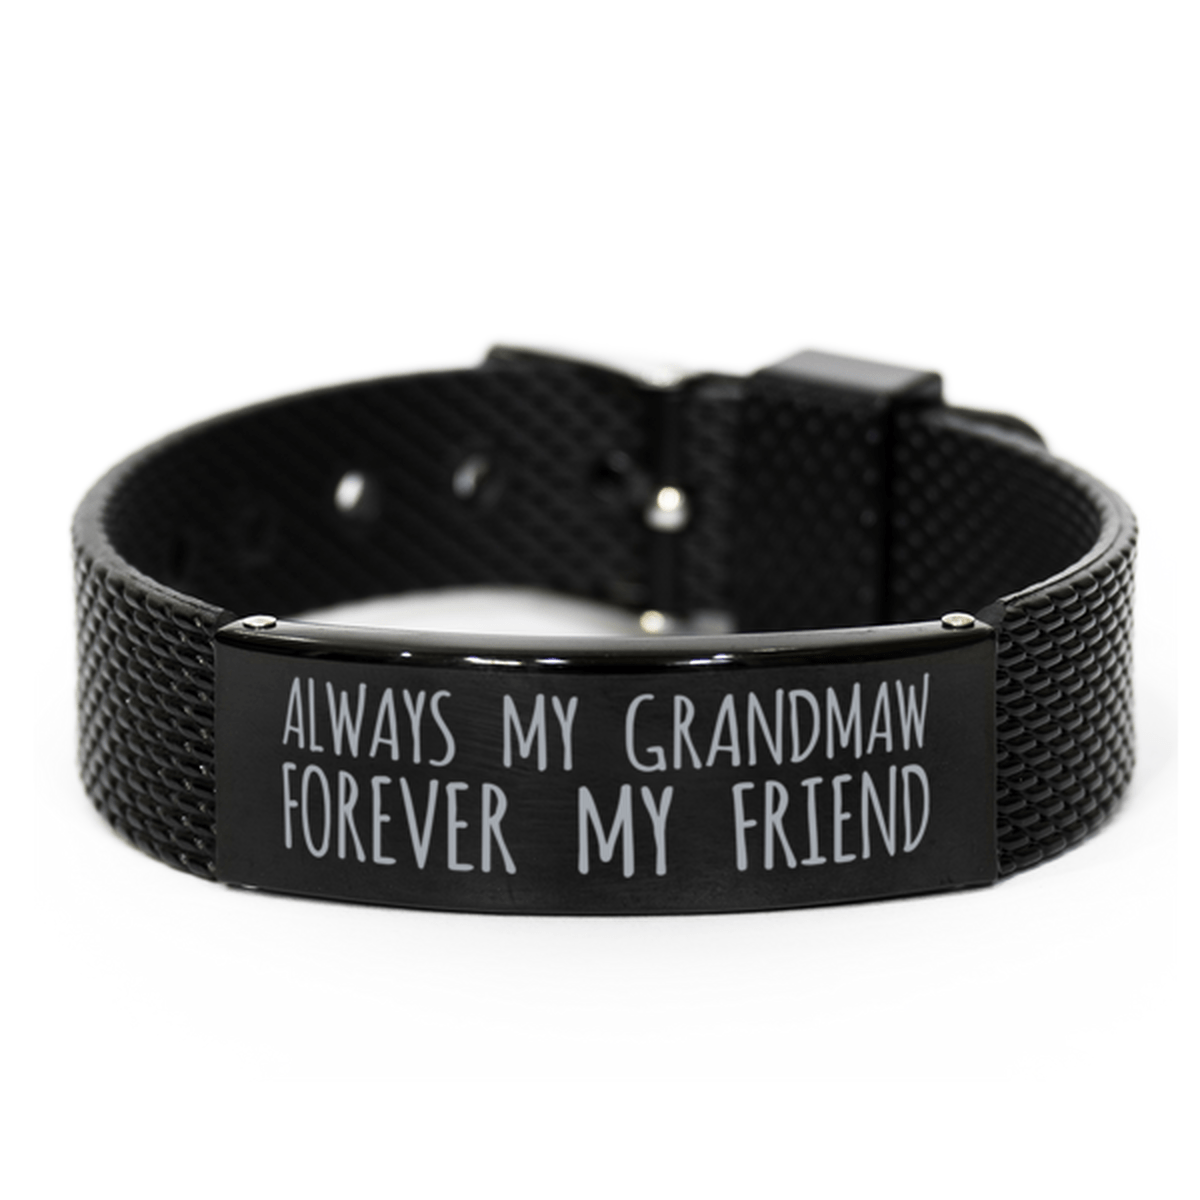 Inspirational Grandmaw Black Shark Mesh Bracelet, Always My Grandmaw Forever My Friend, Best Birthday Gifts for Family Friends